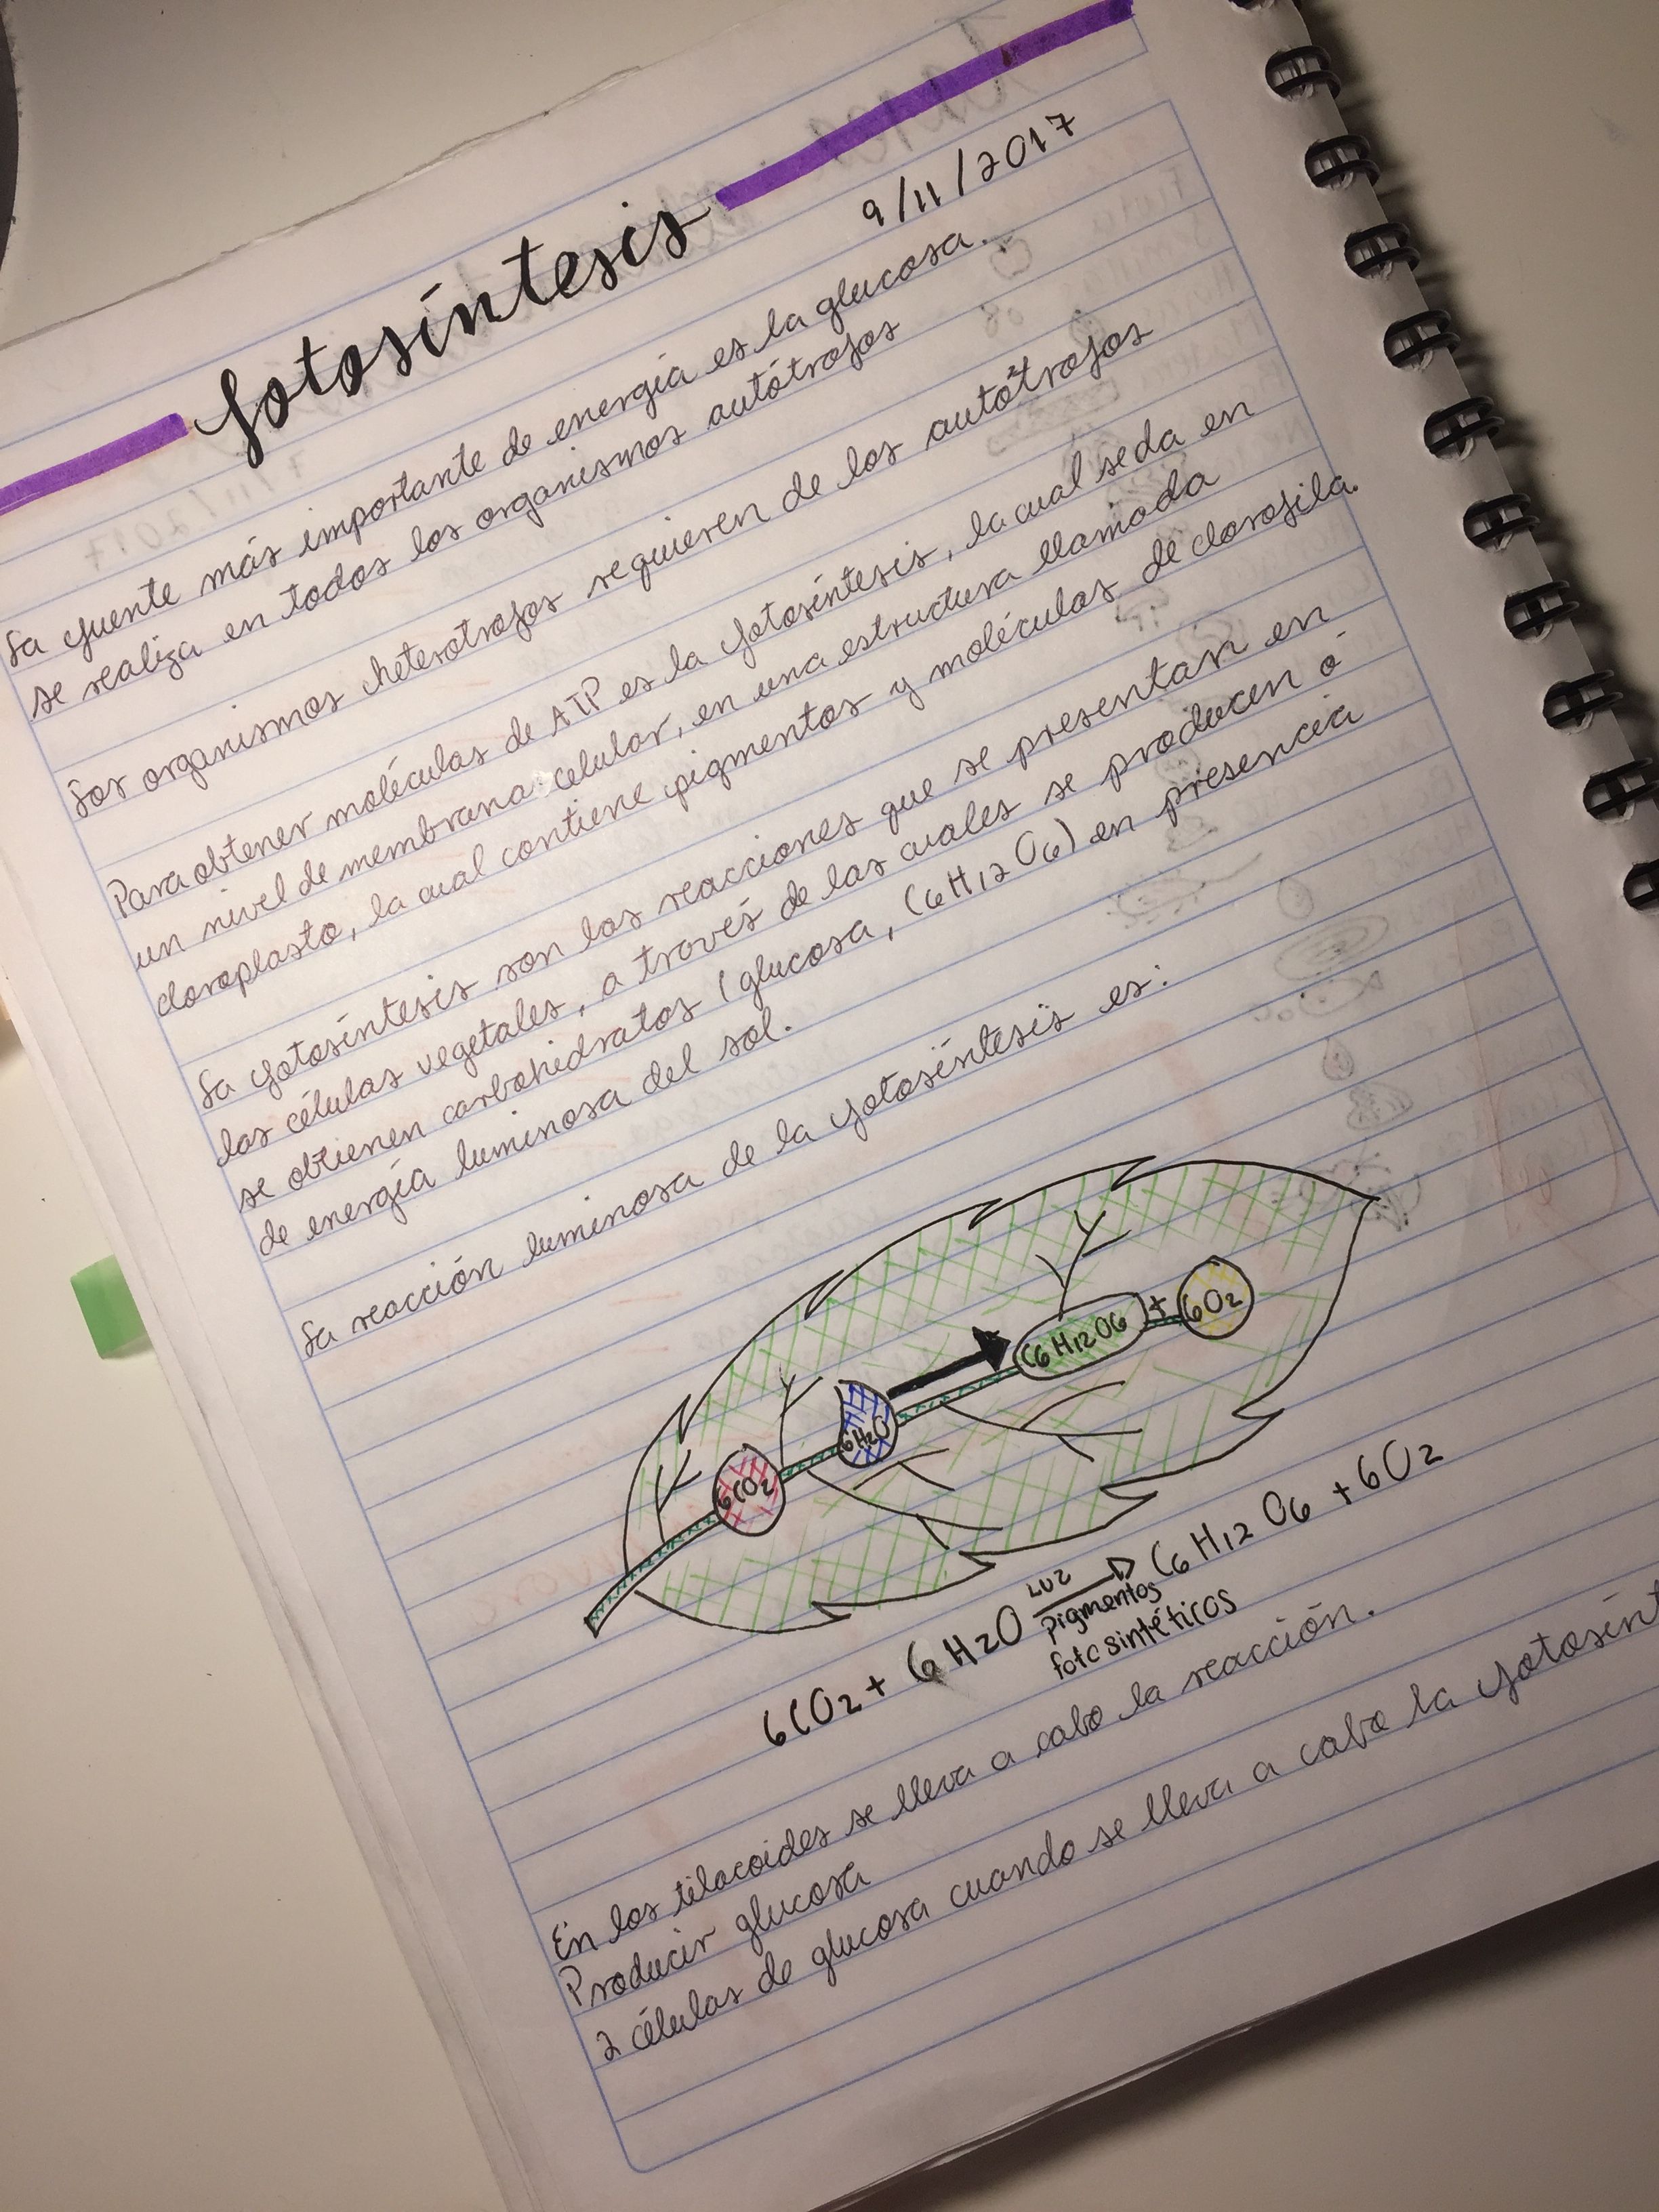 Pin by Daria on Organizacja i nauka | Pinterest | Handwriting ...